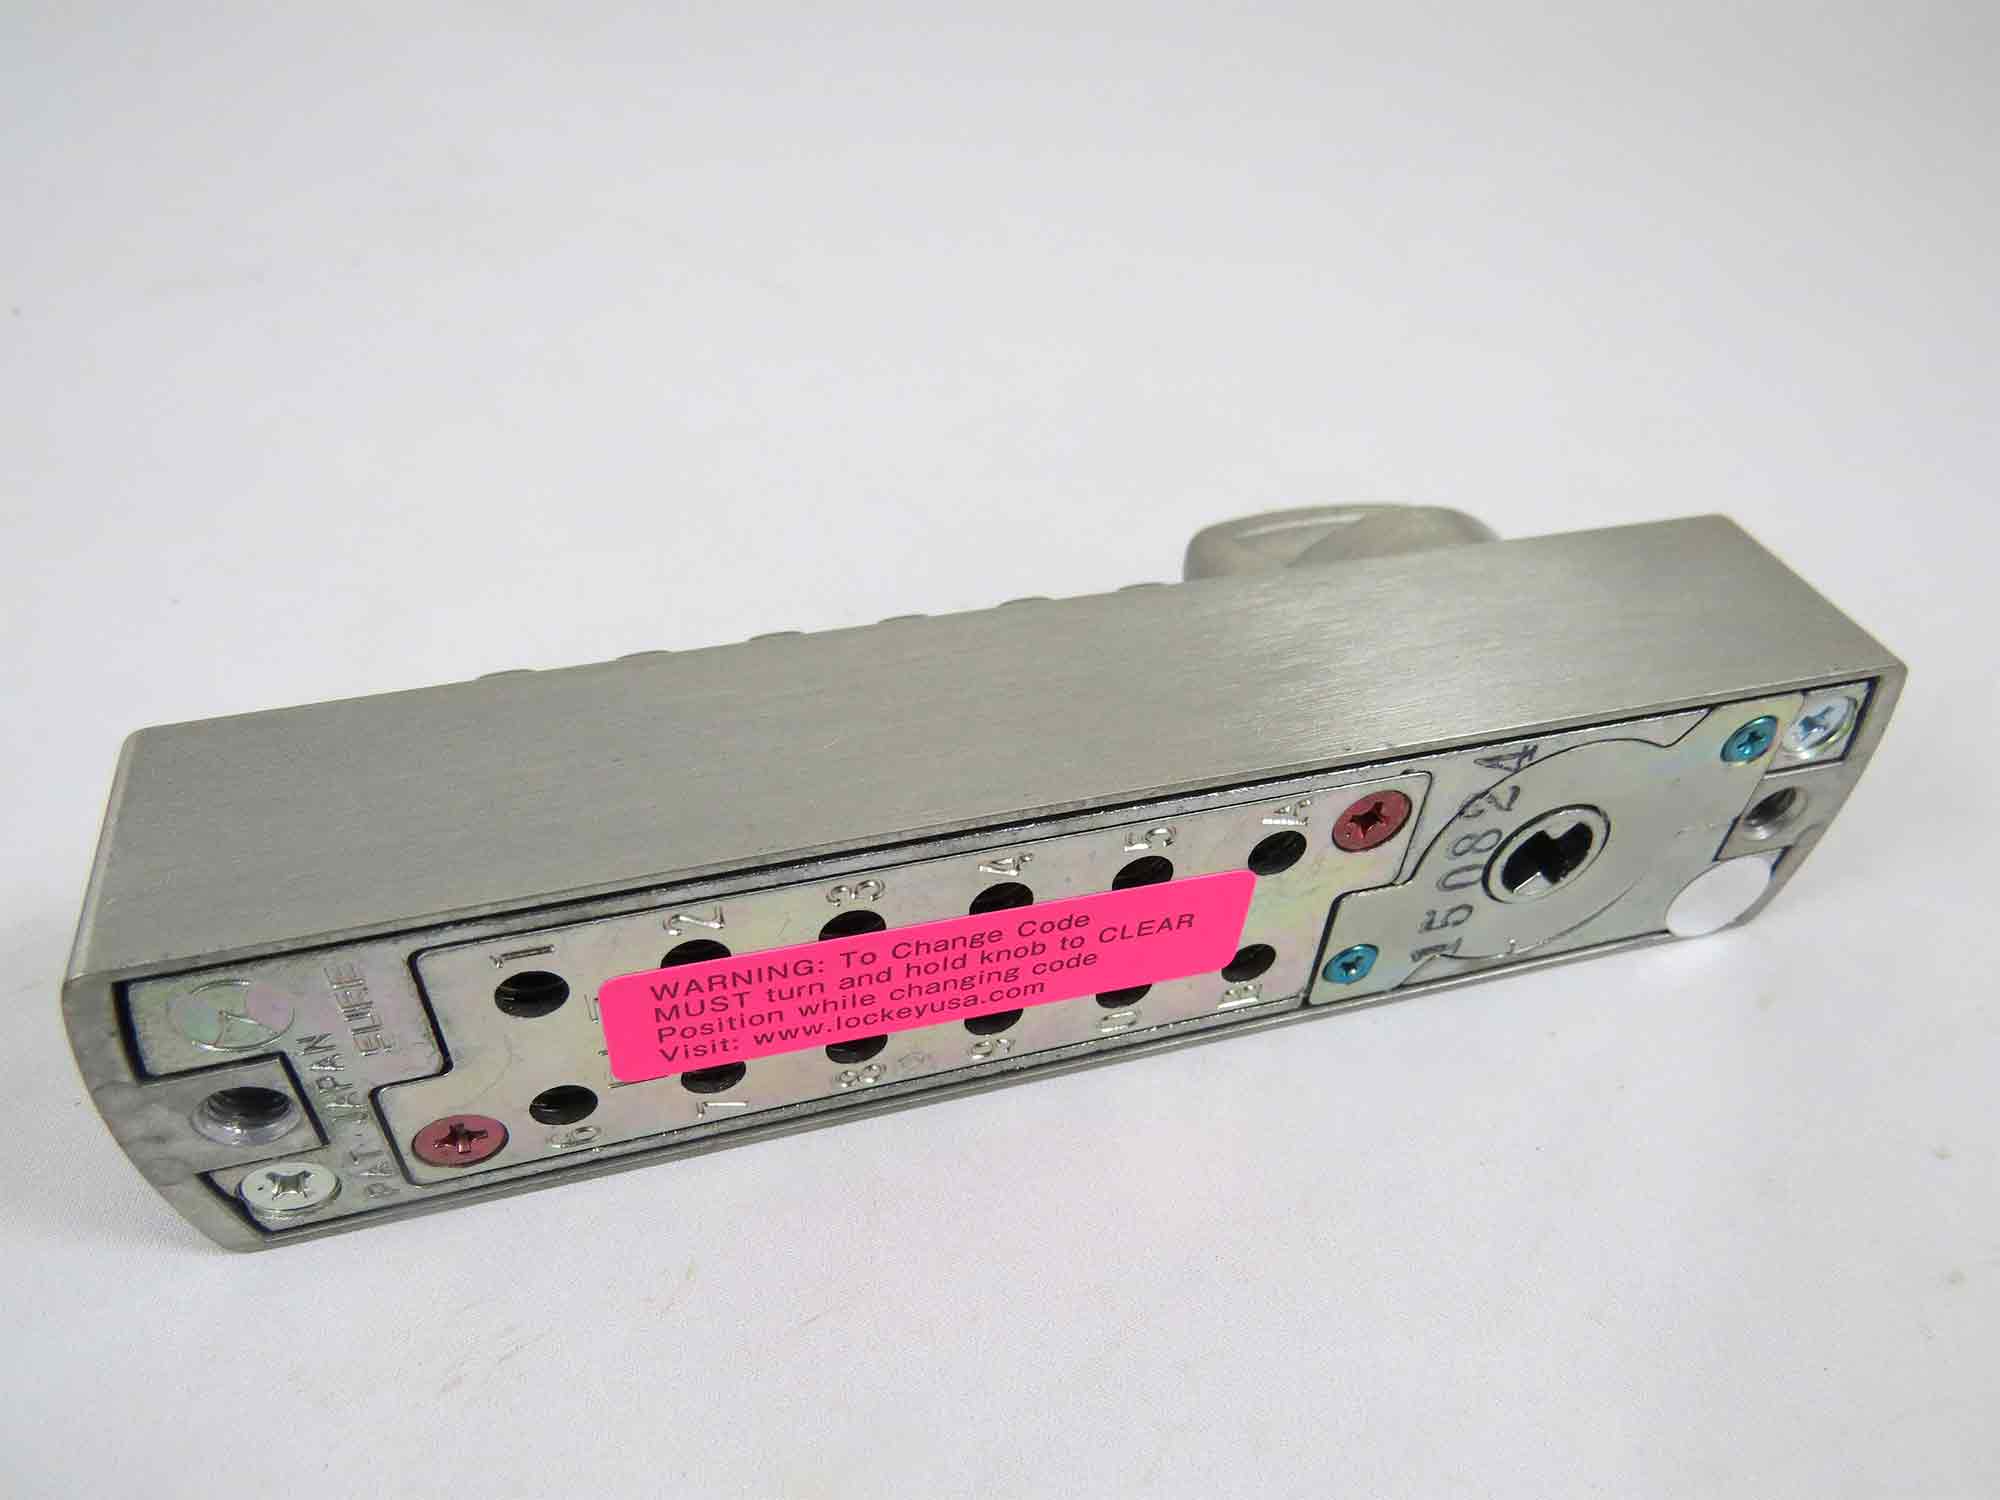 Lockey C150 Surface-Mount Cabinet Hookbolt Keypad Lock